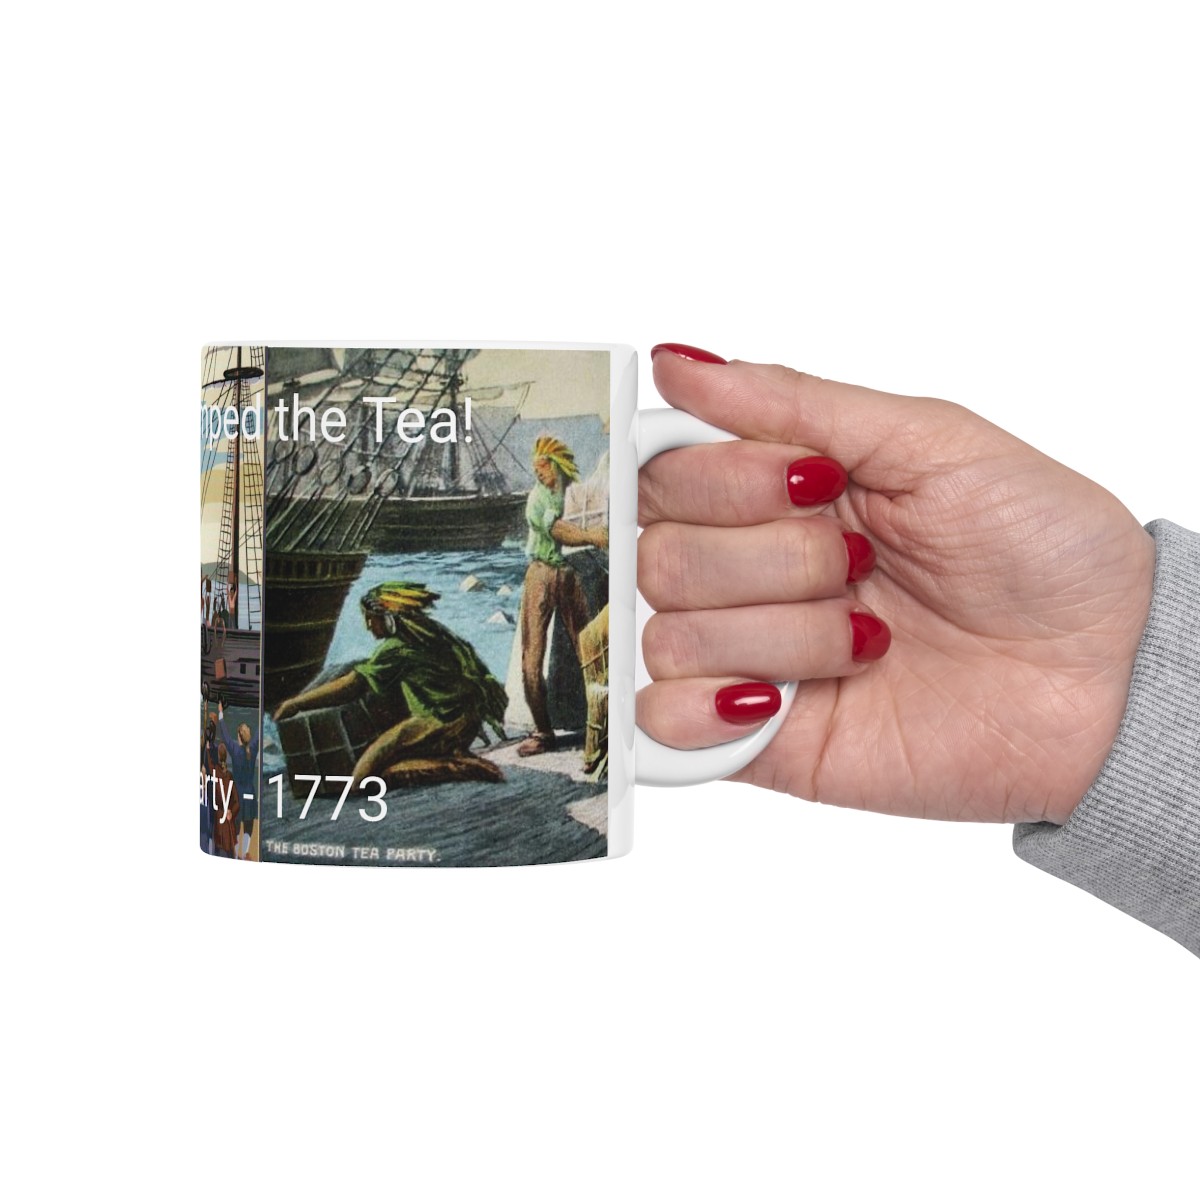 My Ancestor Dumped the Tea! Boston Tea Party Vintage Postcards - Ceramic Mug 11oz product thumbnail image